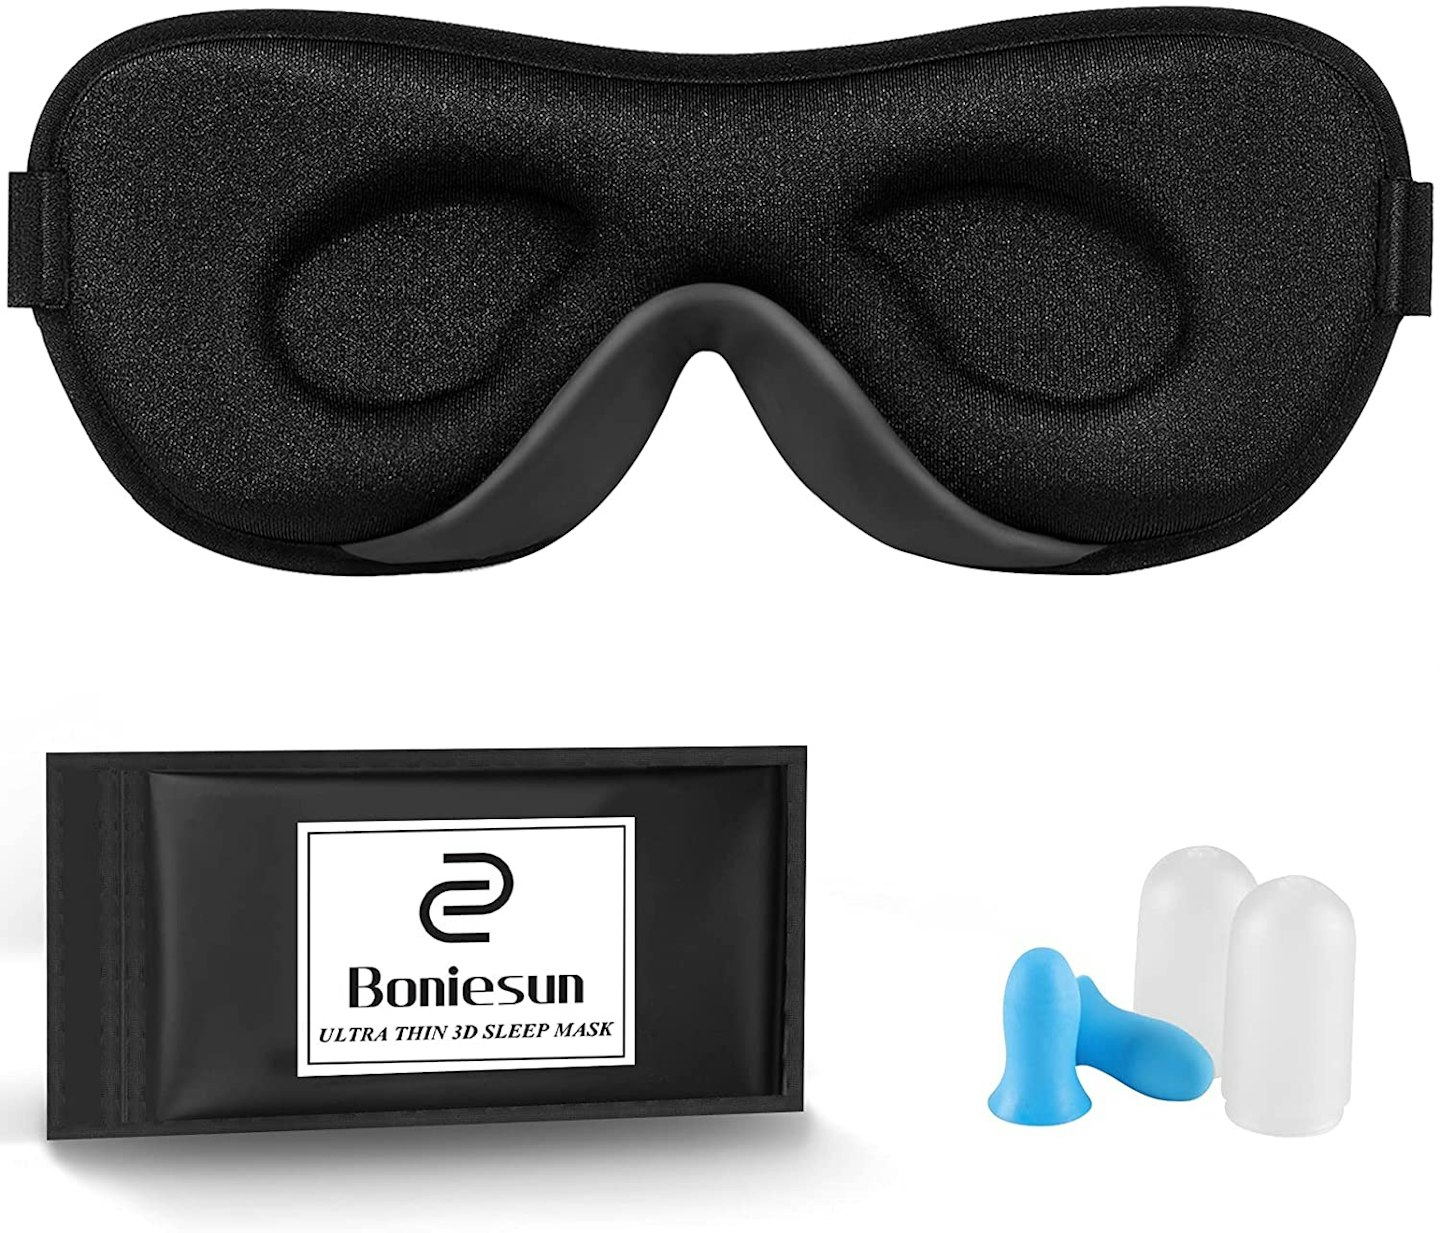 Boniesun Blackout Eye Mask for Sleeping